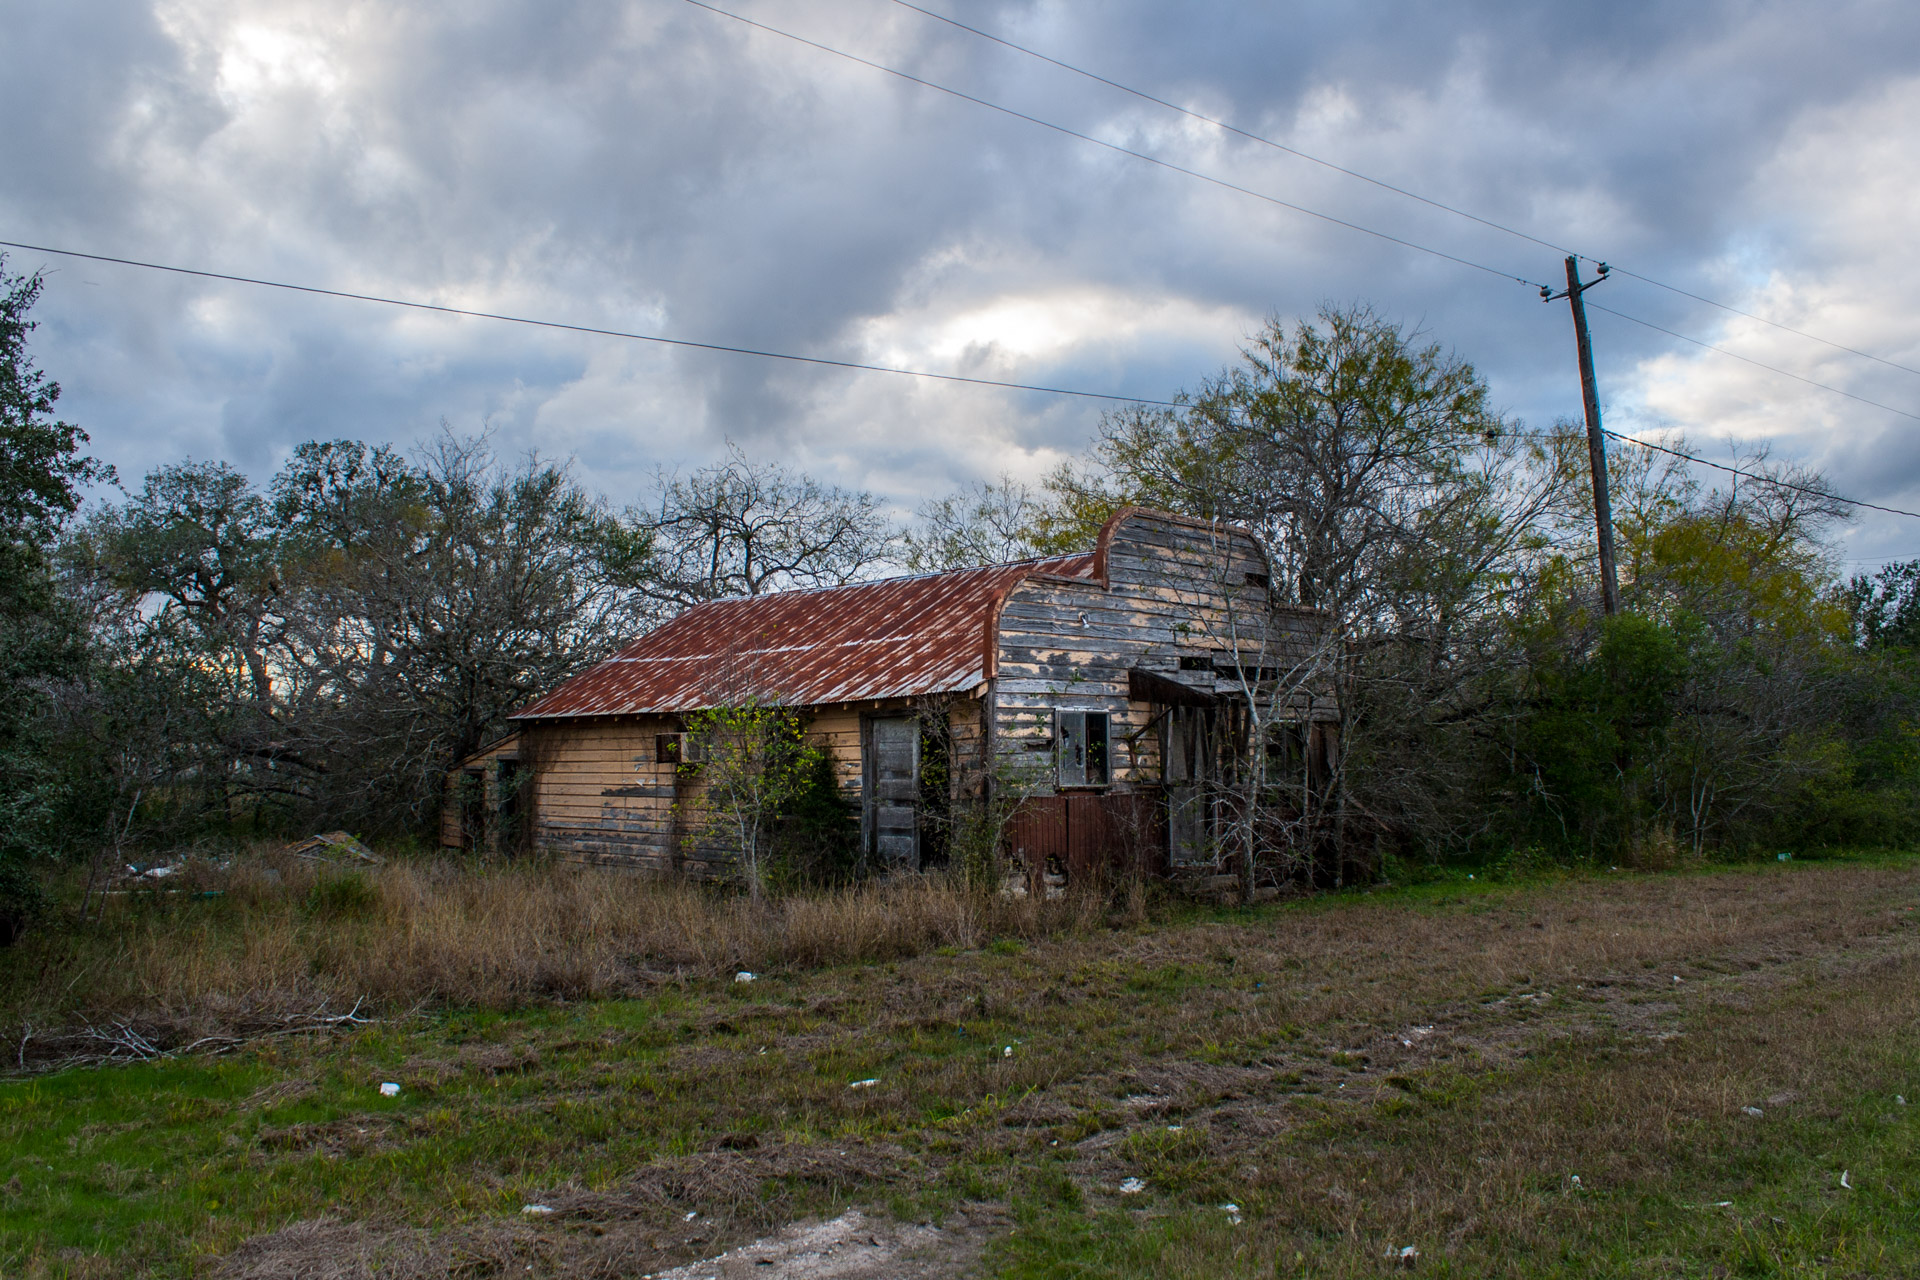 Tulsita, Texas - The Saloon Style Building (side far)